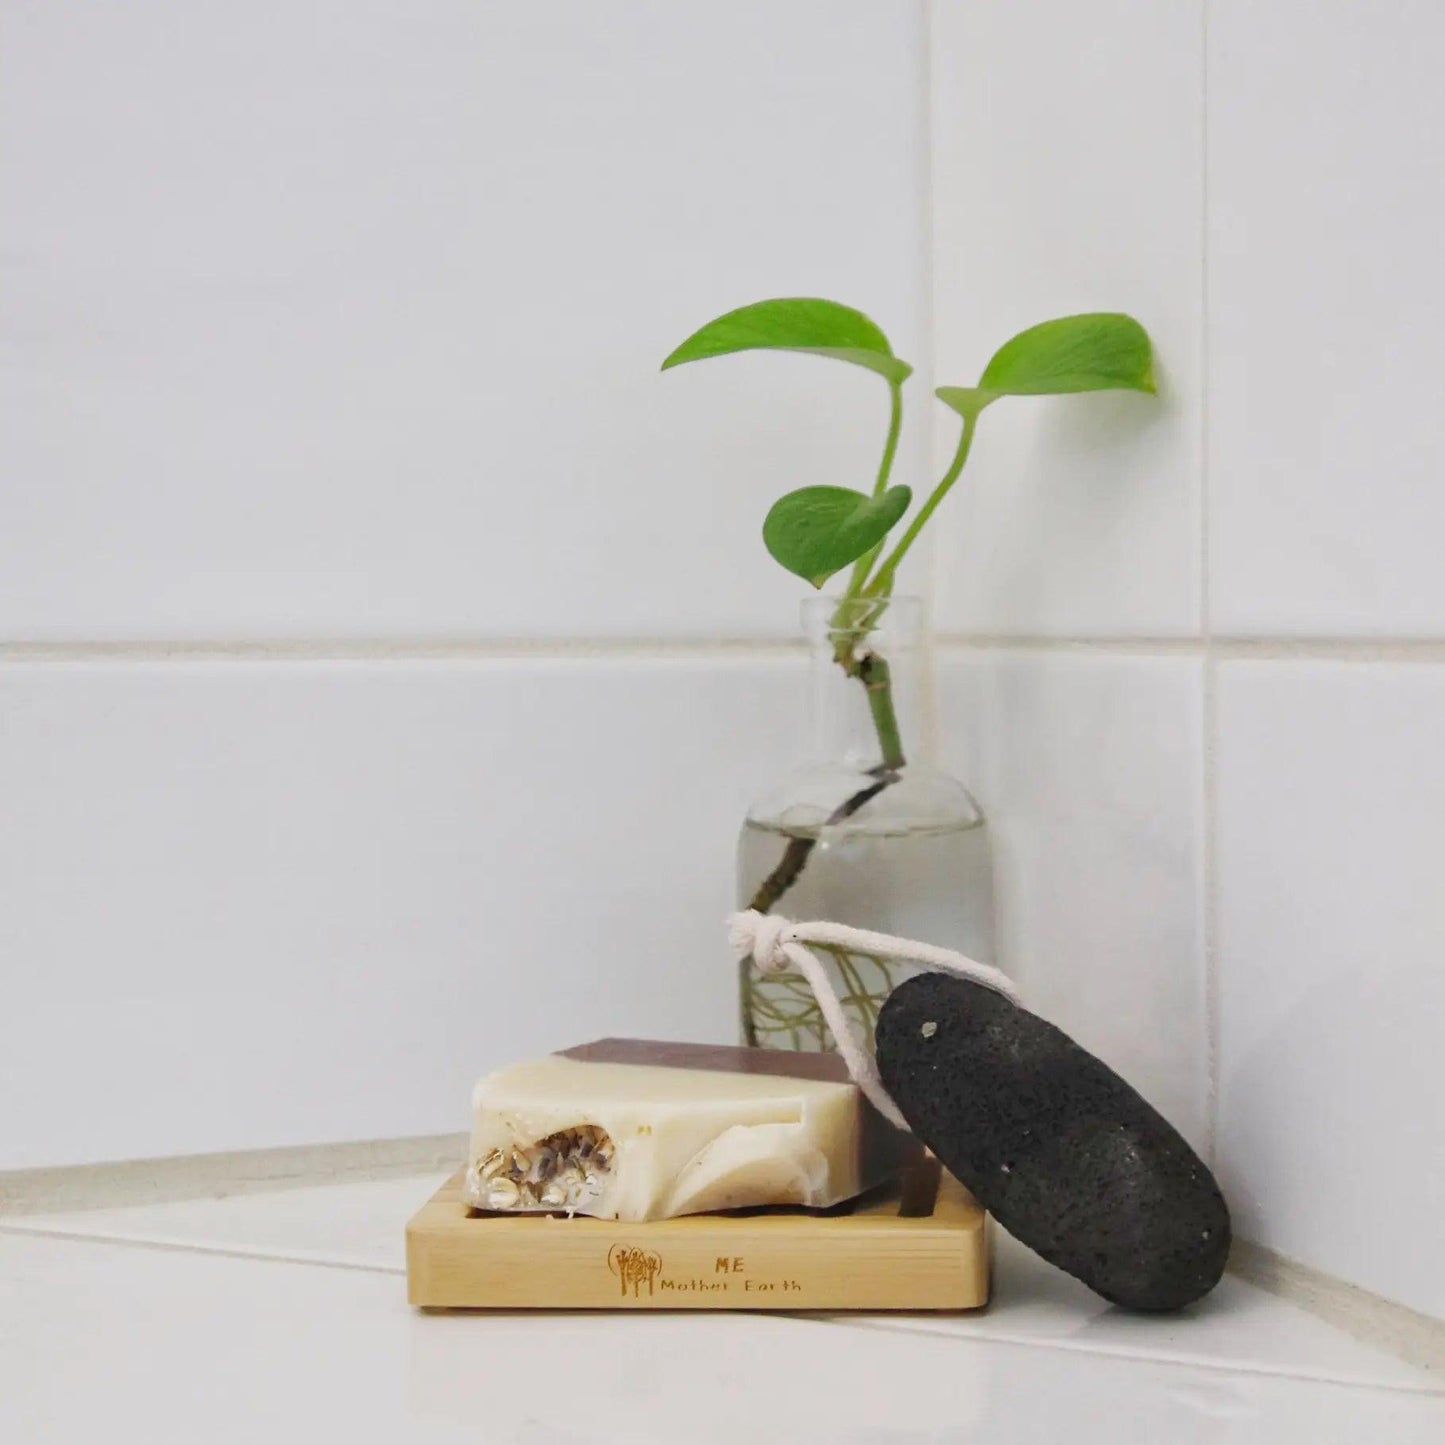 Soap Shelf, Sustainable, Responsible, Eco-Friendly - Ninth & Pine